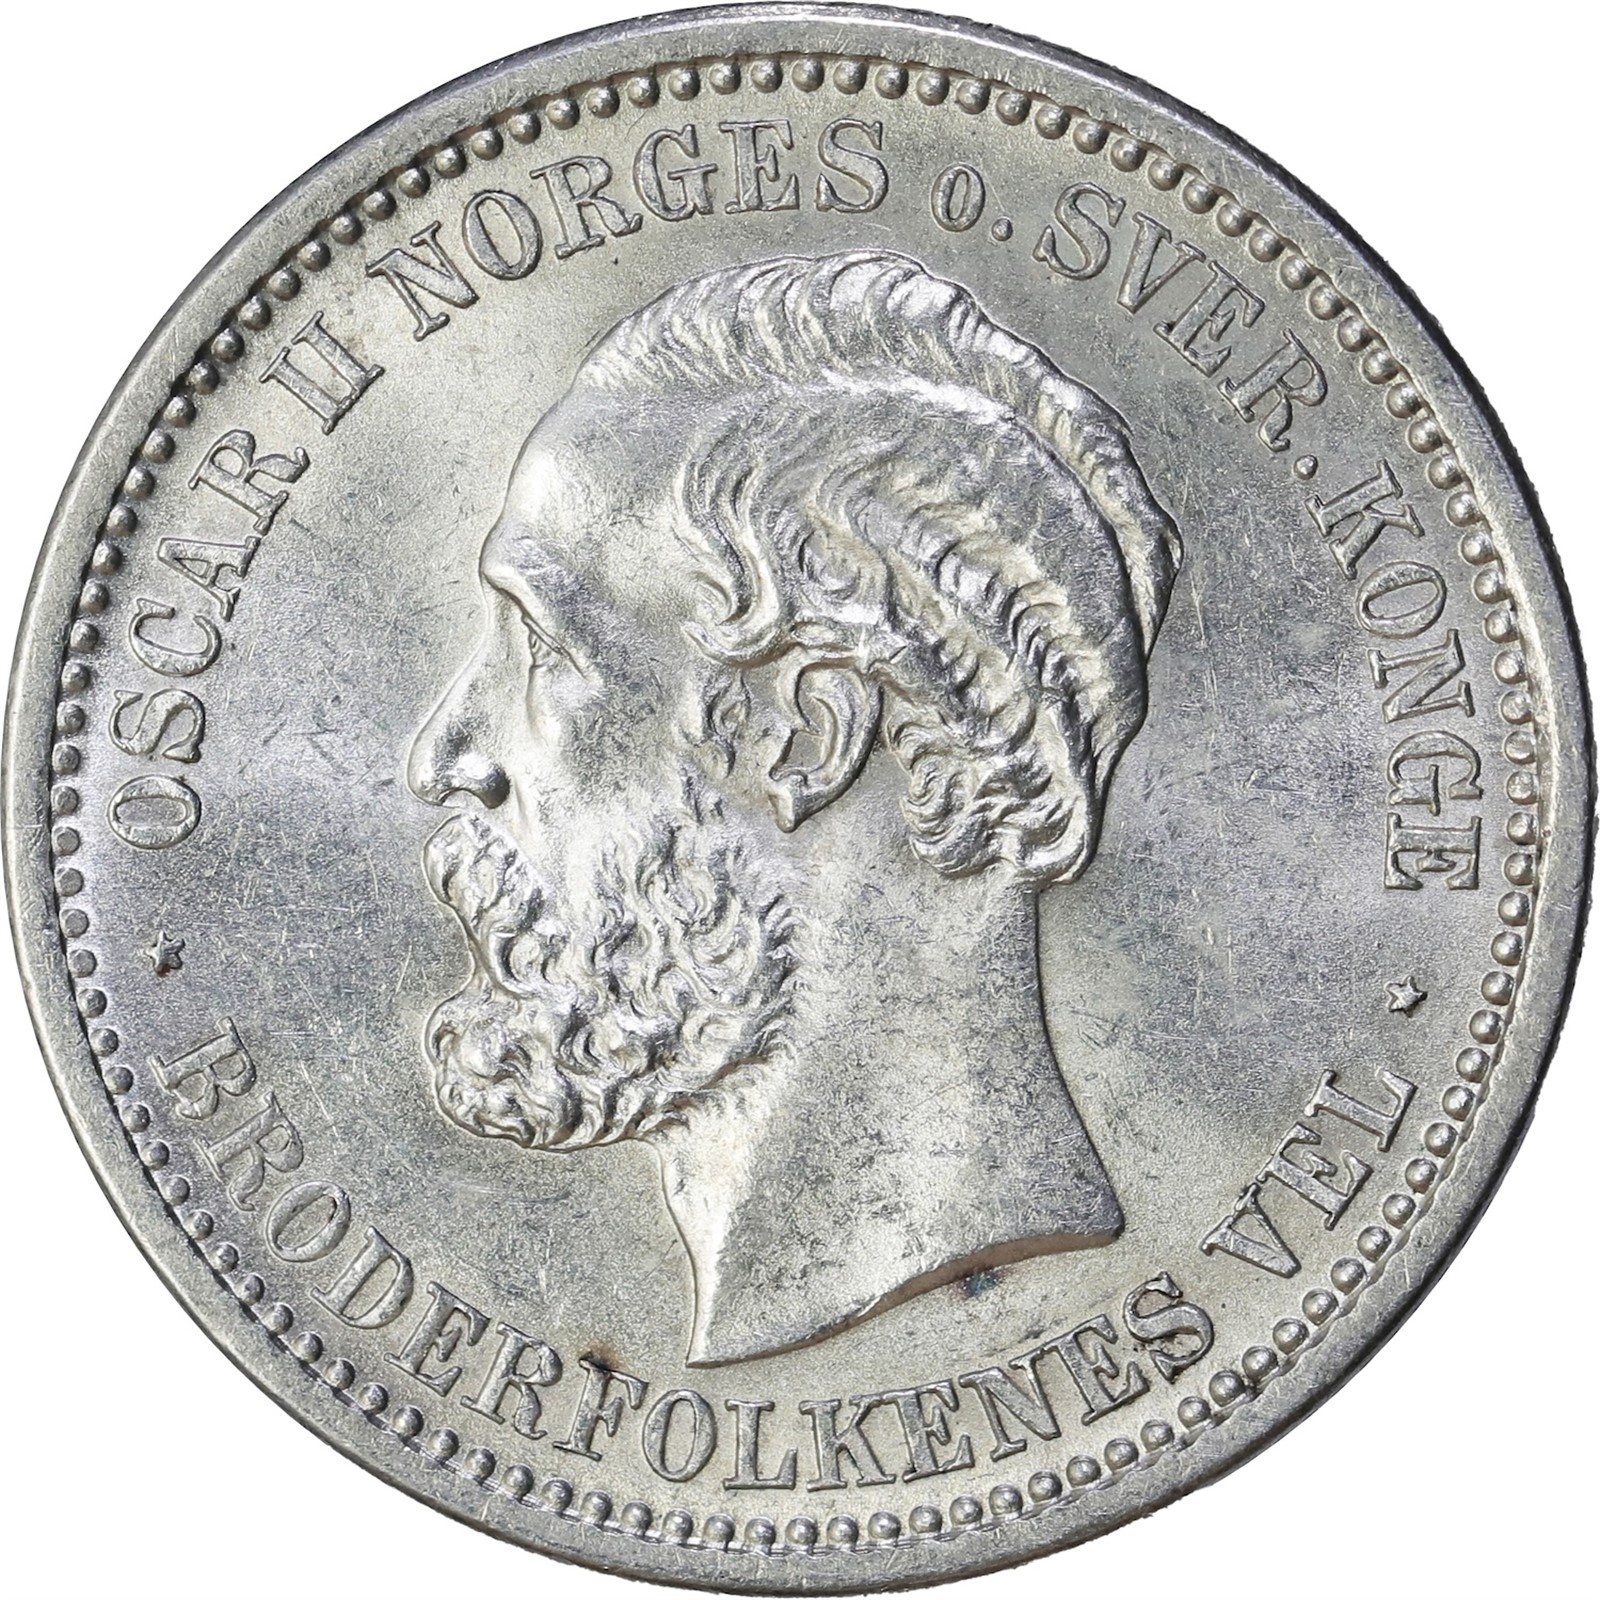 NORWAY. Oscar II. 1 Krone 1890 Kv 0 (UNC)